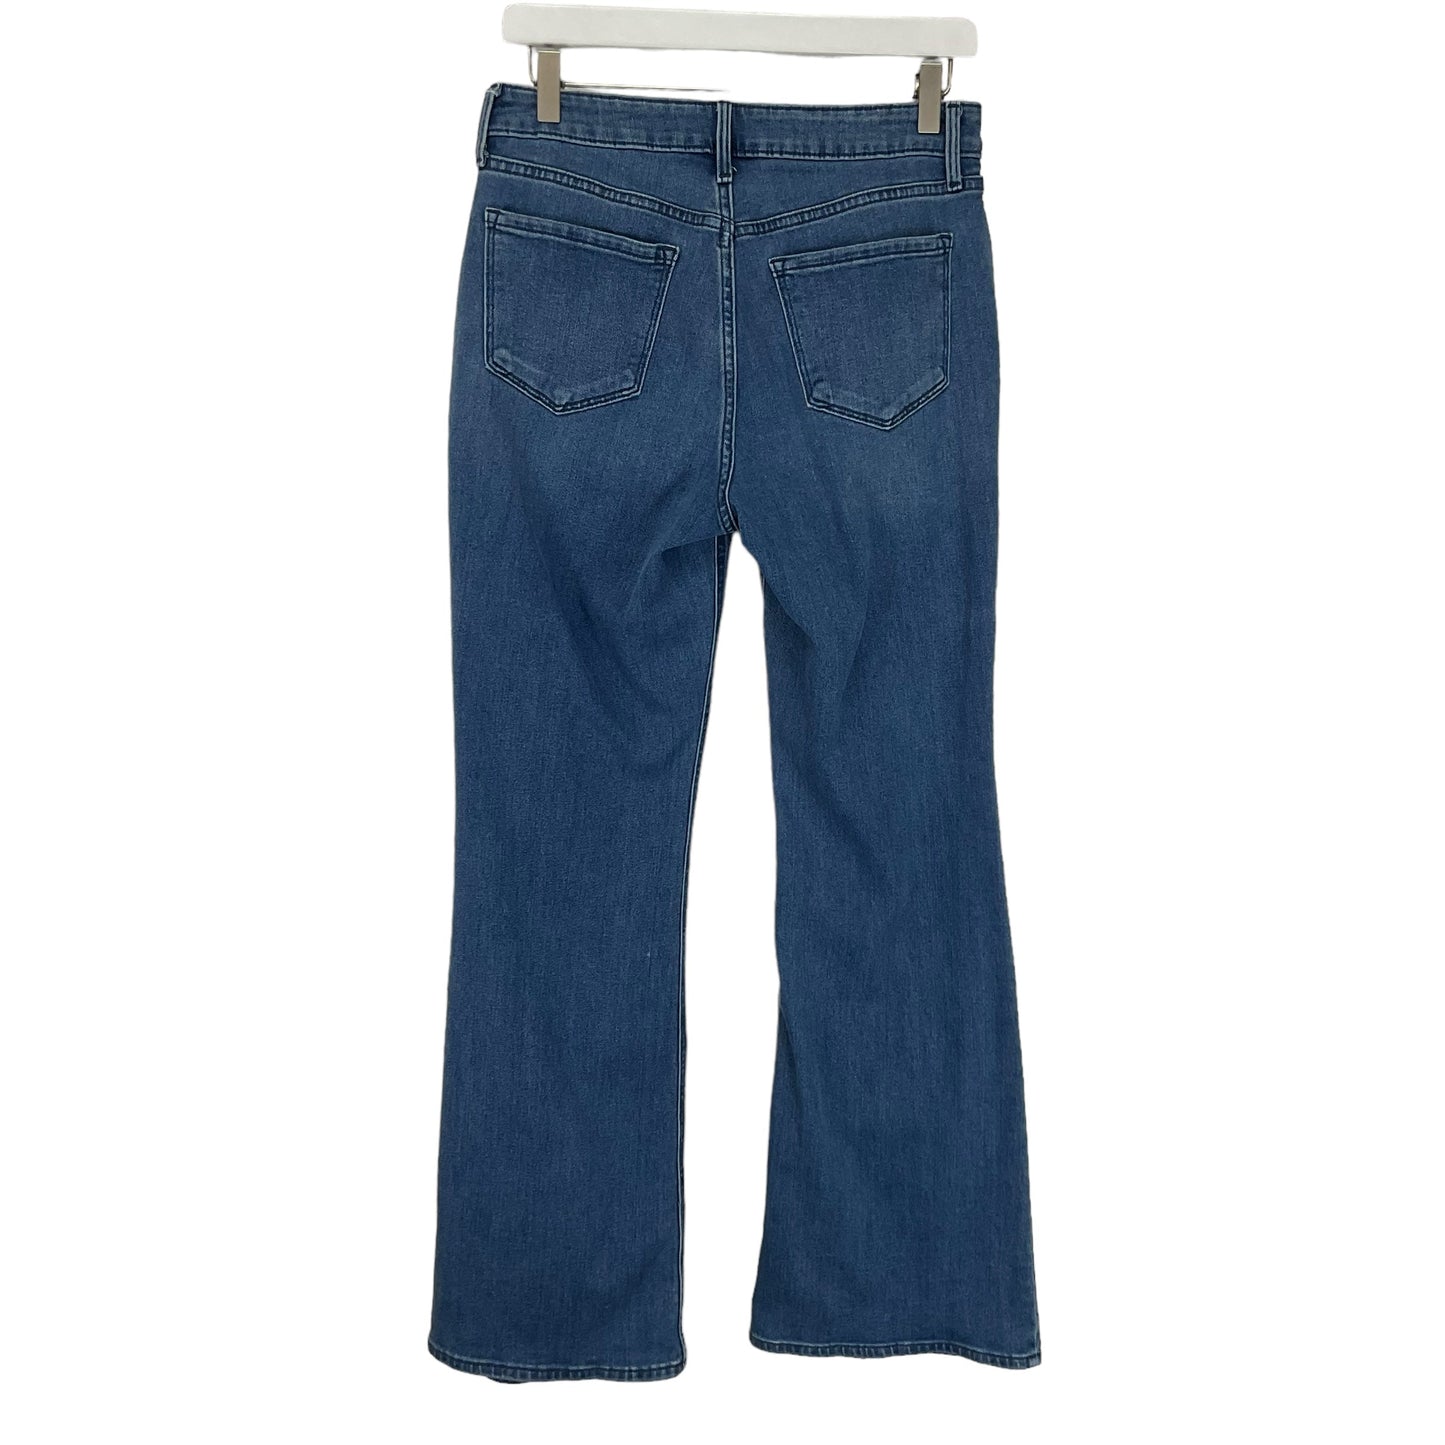 Blue Denim Jeans Wide Leg Old Navy, Size 8